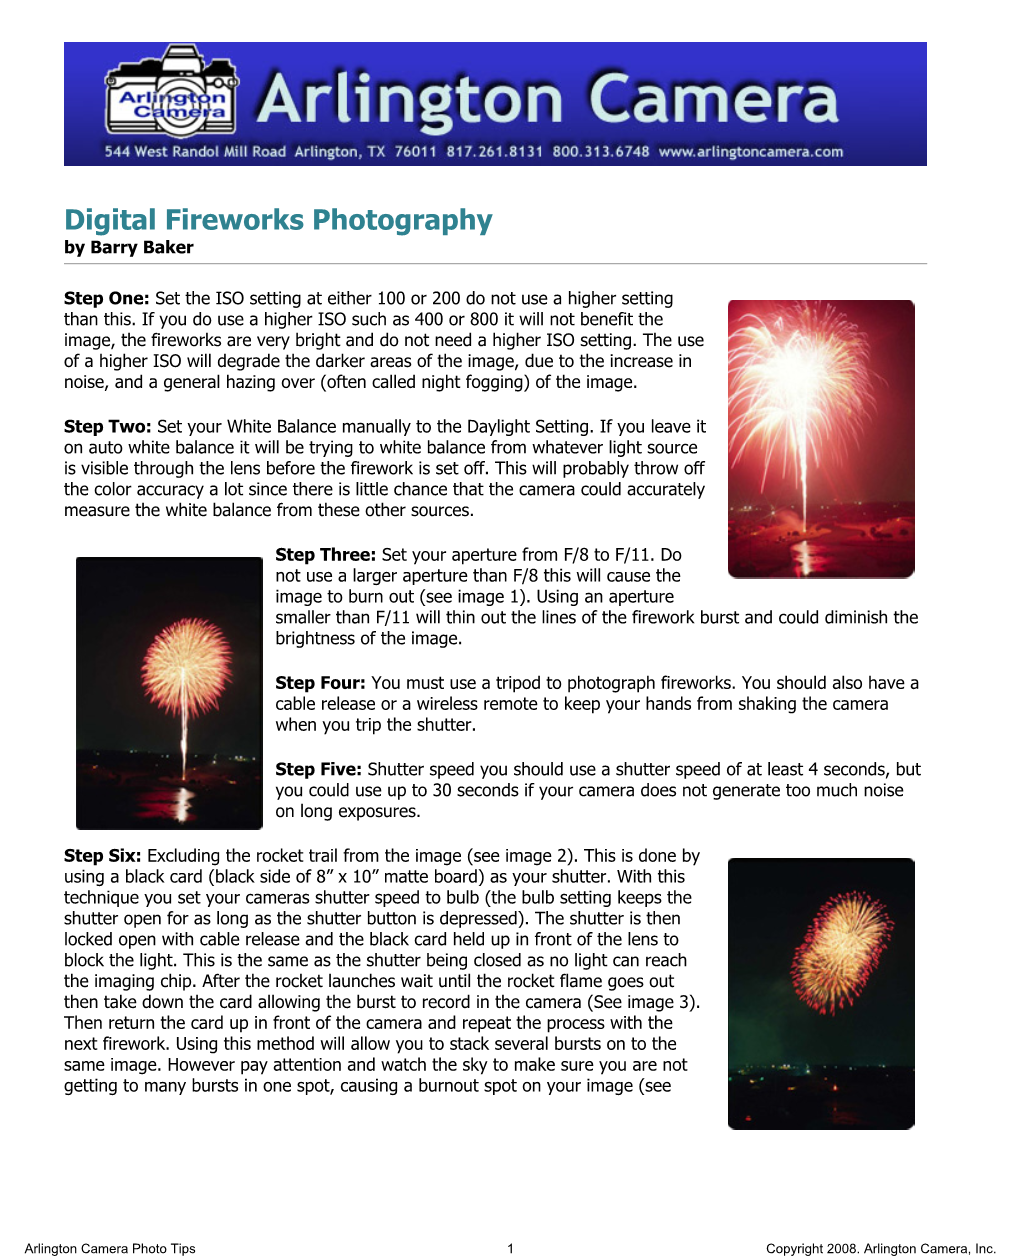 Digital Fireworks Photography by Barry Baker